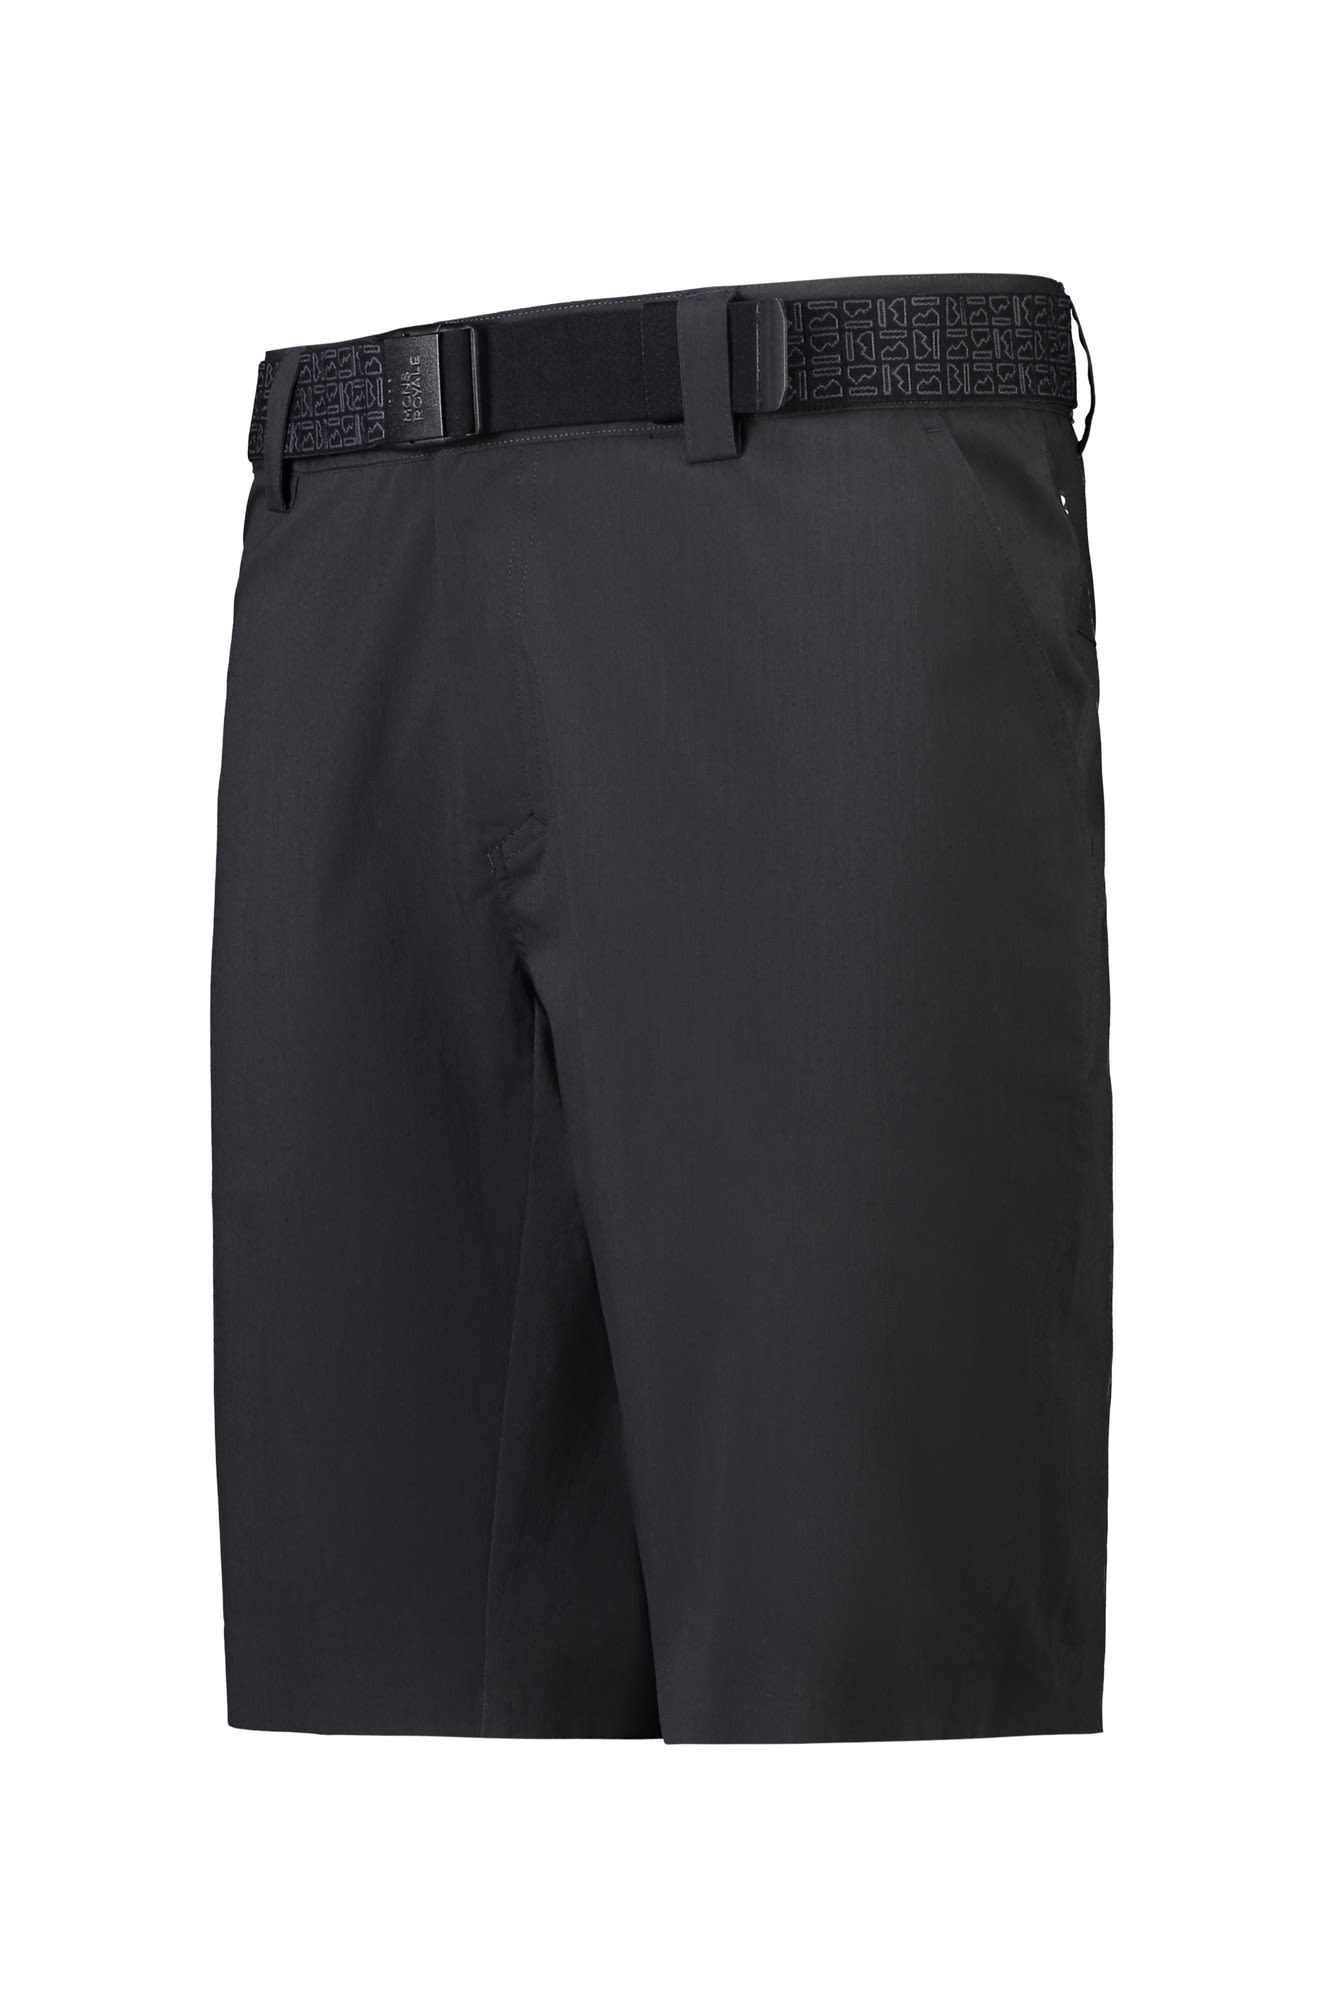 Mons Royale M Drift Shorts (vorgängermodell) Schwarz | Herren Fahrrad Shorts